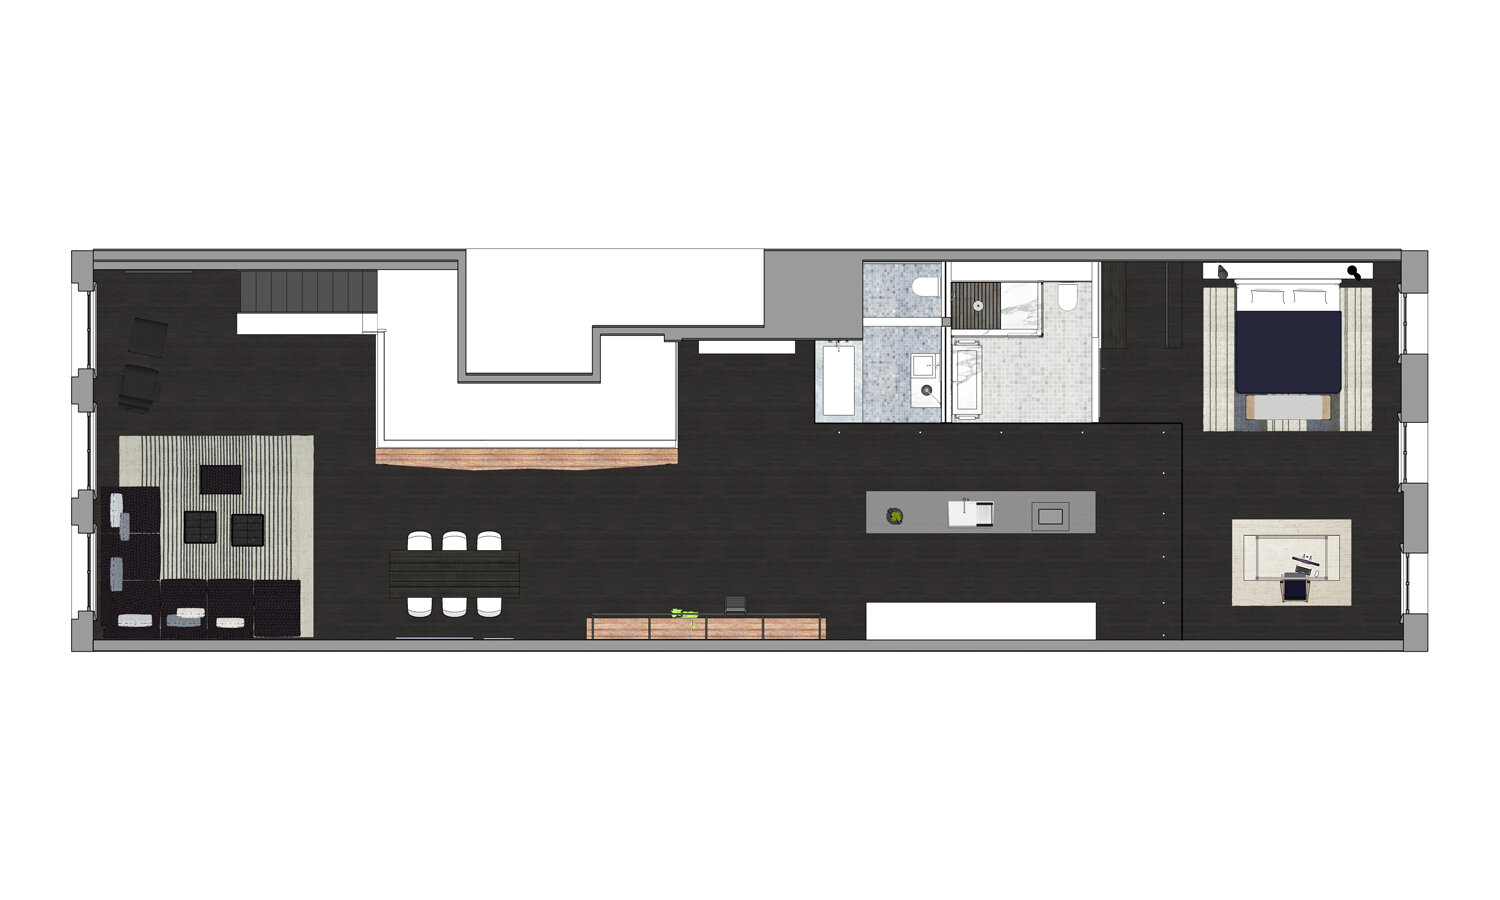 NYC SOHO LOFT GUT RENOVATION BY NEW YORK ARCHITECT AND INTERIOR DESIGNER ADI GERSHONI - Loft Plan